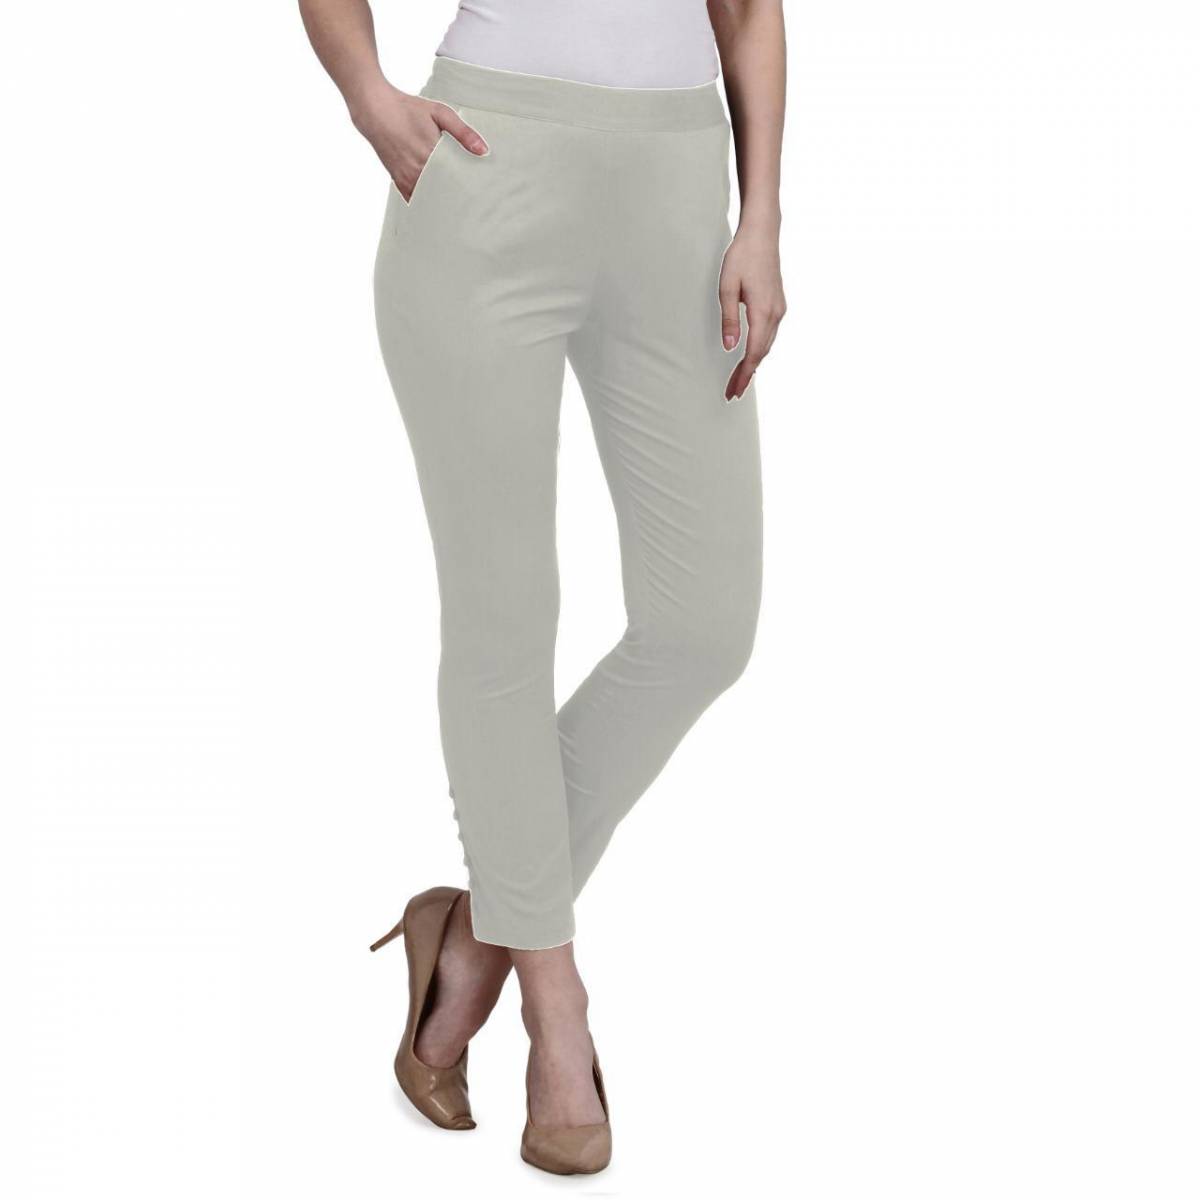 Juniper - White Cotton Blend Women's Pencil Pants ( Pack of 1 ) Price in  India - Buy Juniper - White Cotton Blend Women's Pencil Pants ( Pack of 1 )  Online at Snapdeal